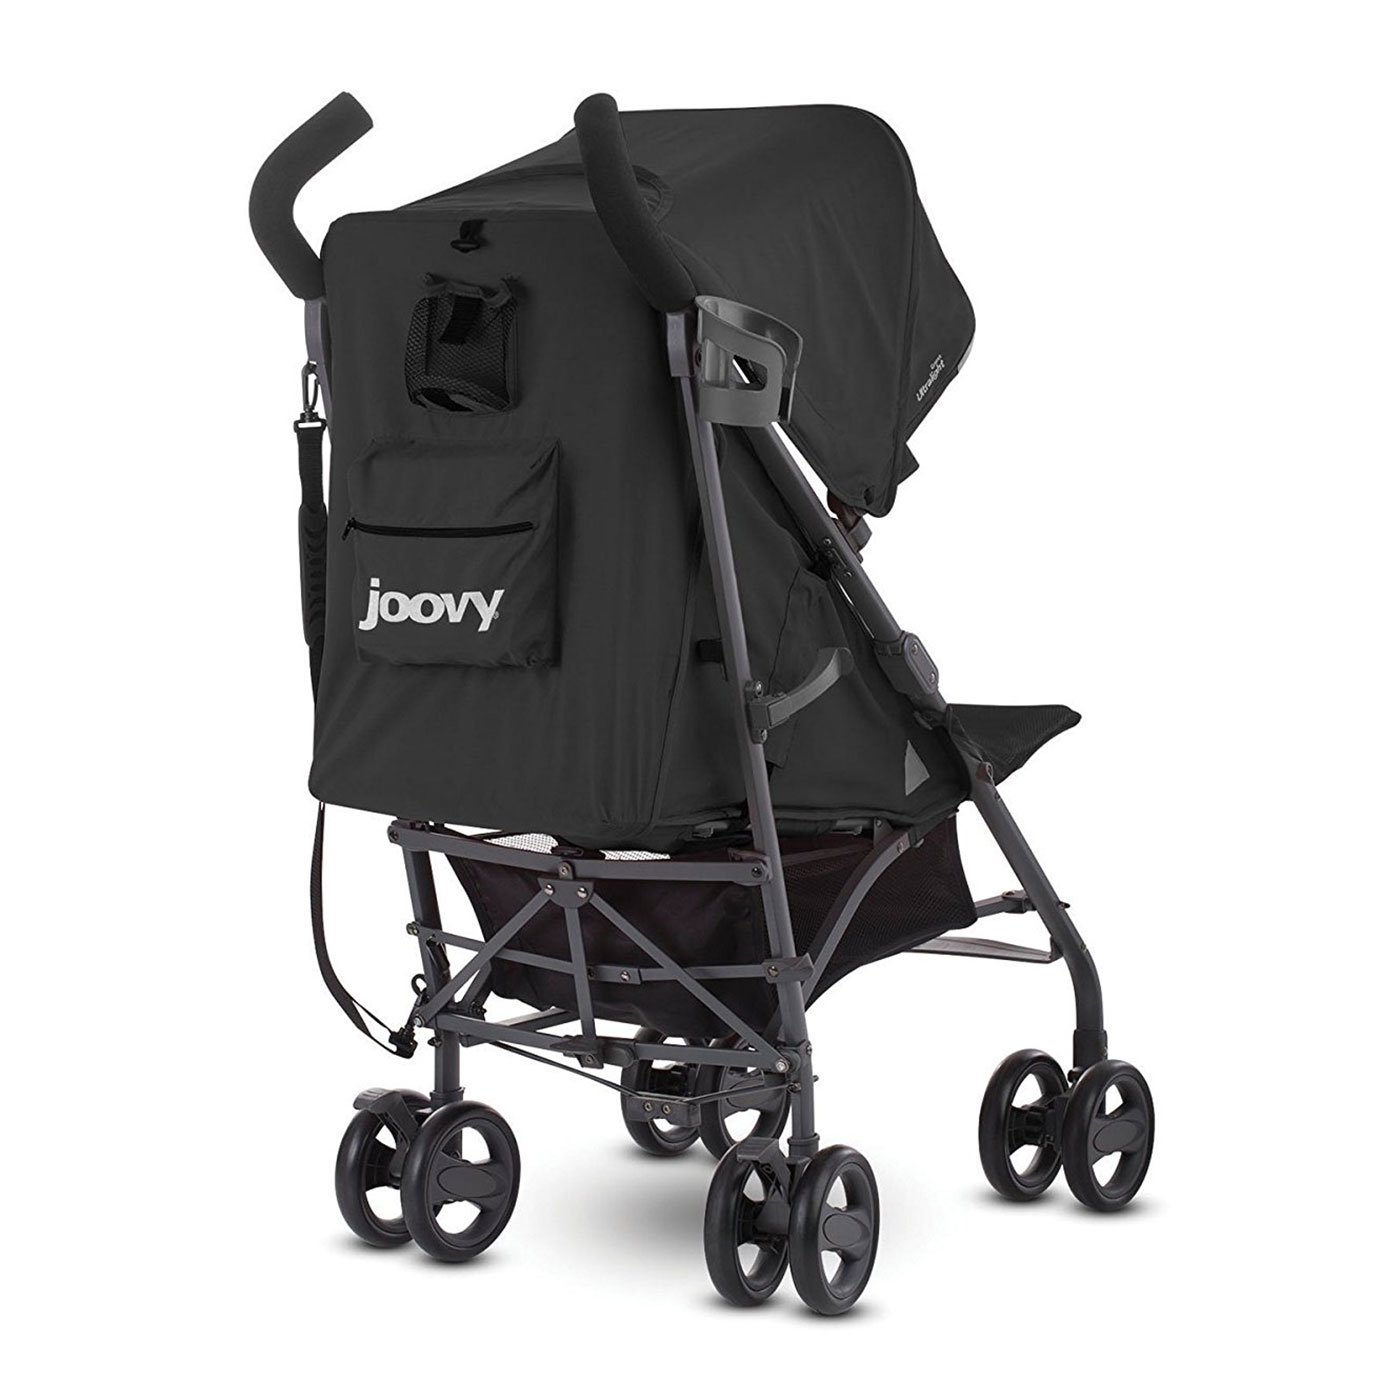 Joovy Groove Umbrella Stroller, Solid Print Black - image 5 of 6